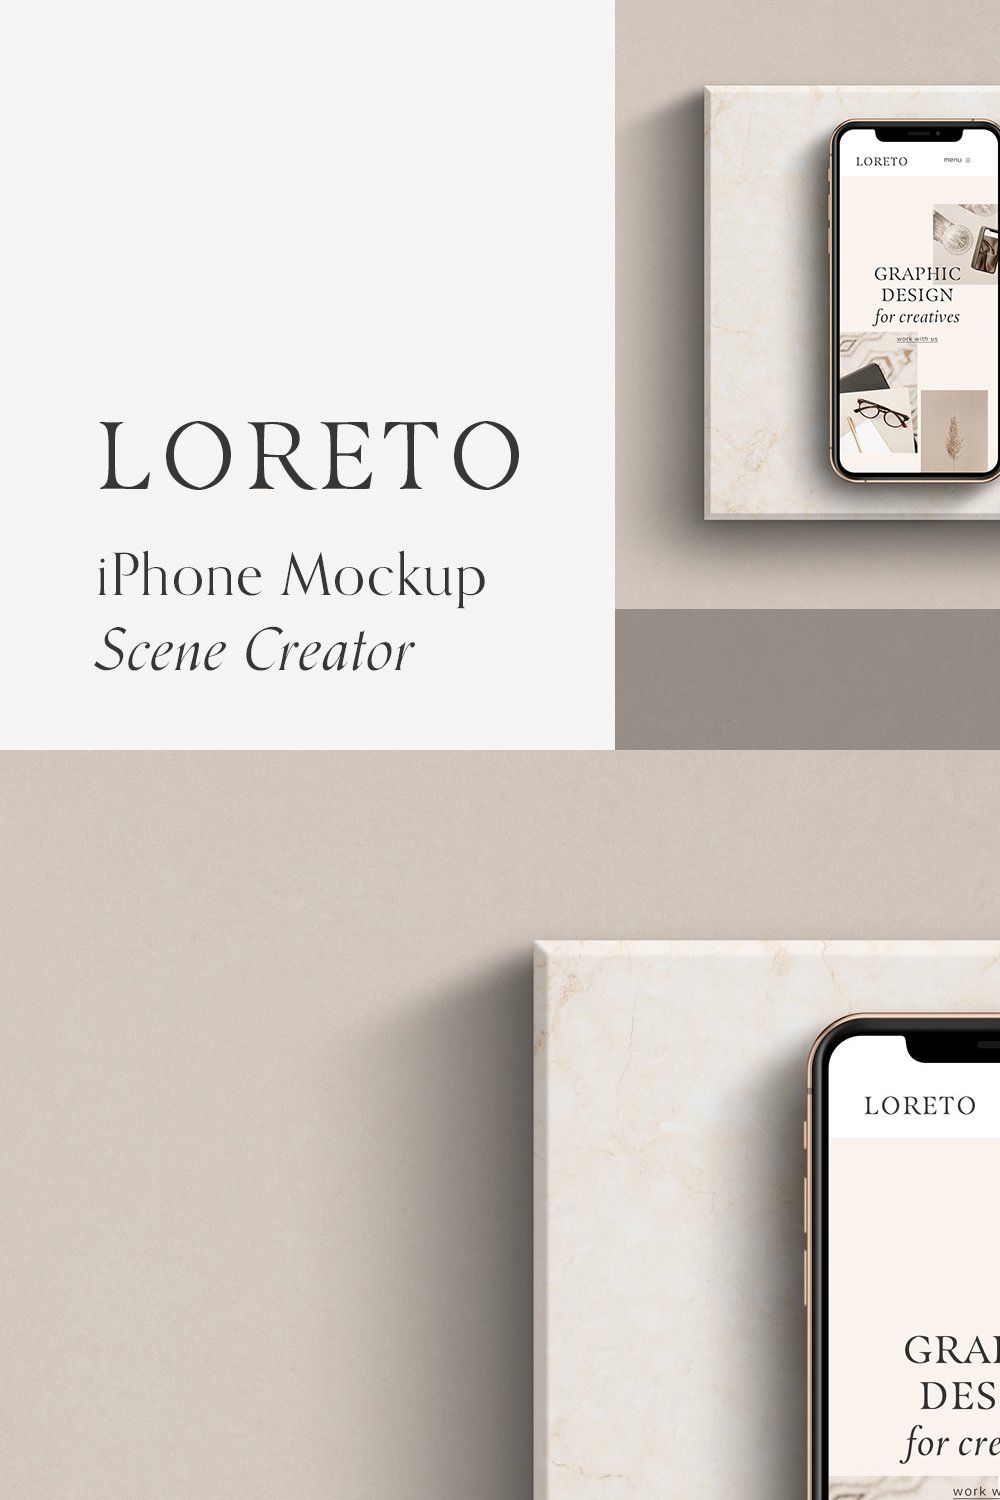 Loreto - iPhone Mockup Scene Creator pinterest preview image.